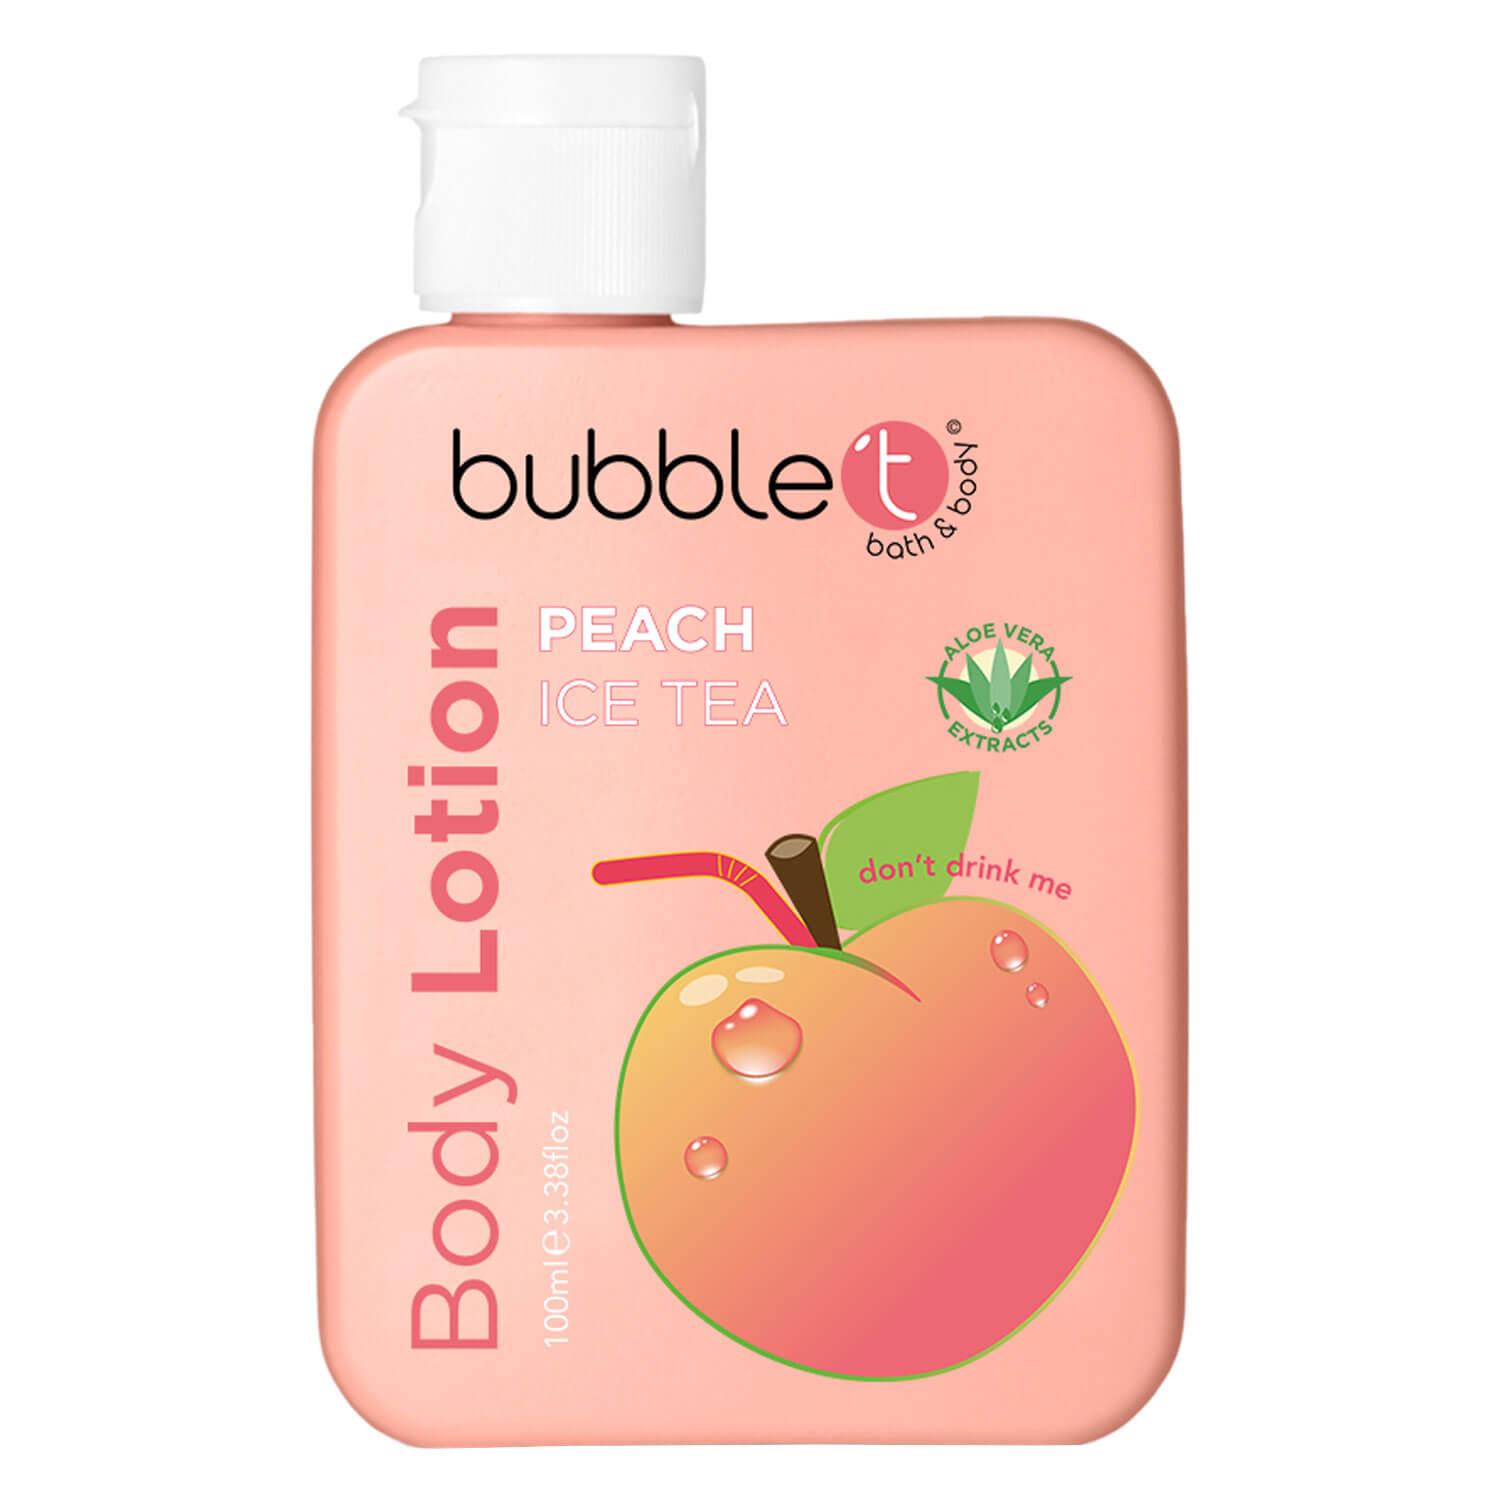 bubble t - Peach Ice Tea Body Lotion